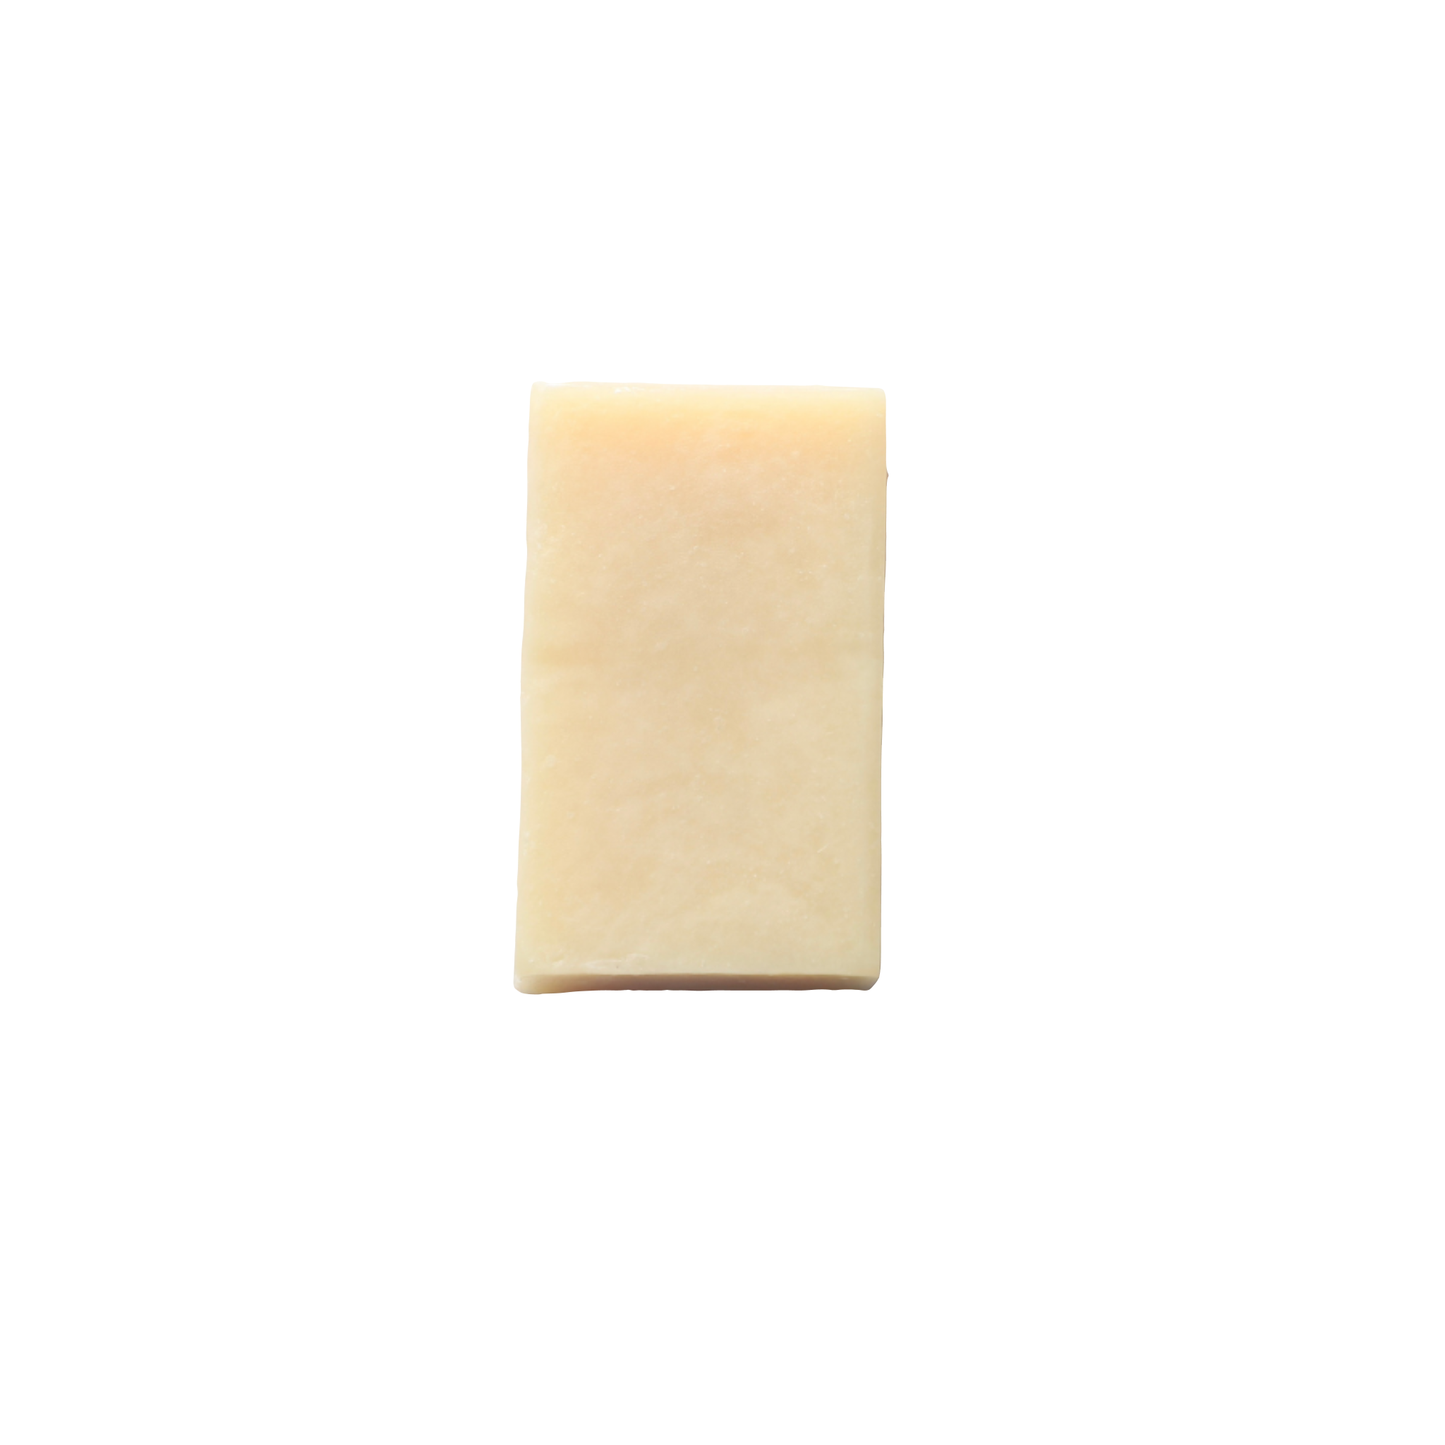 The Cream Bar Soap